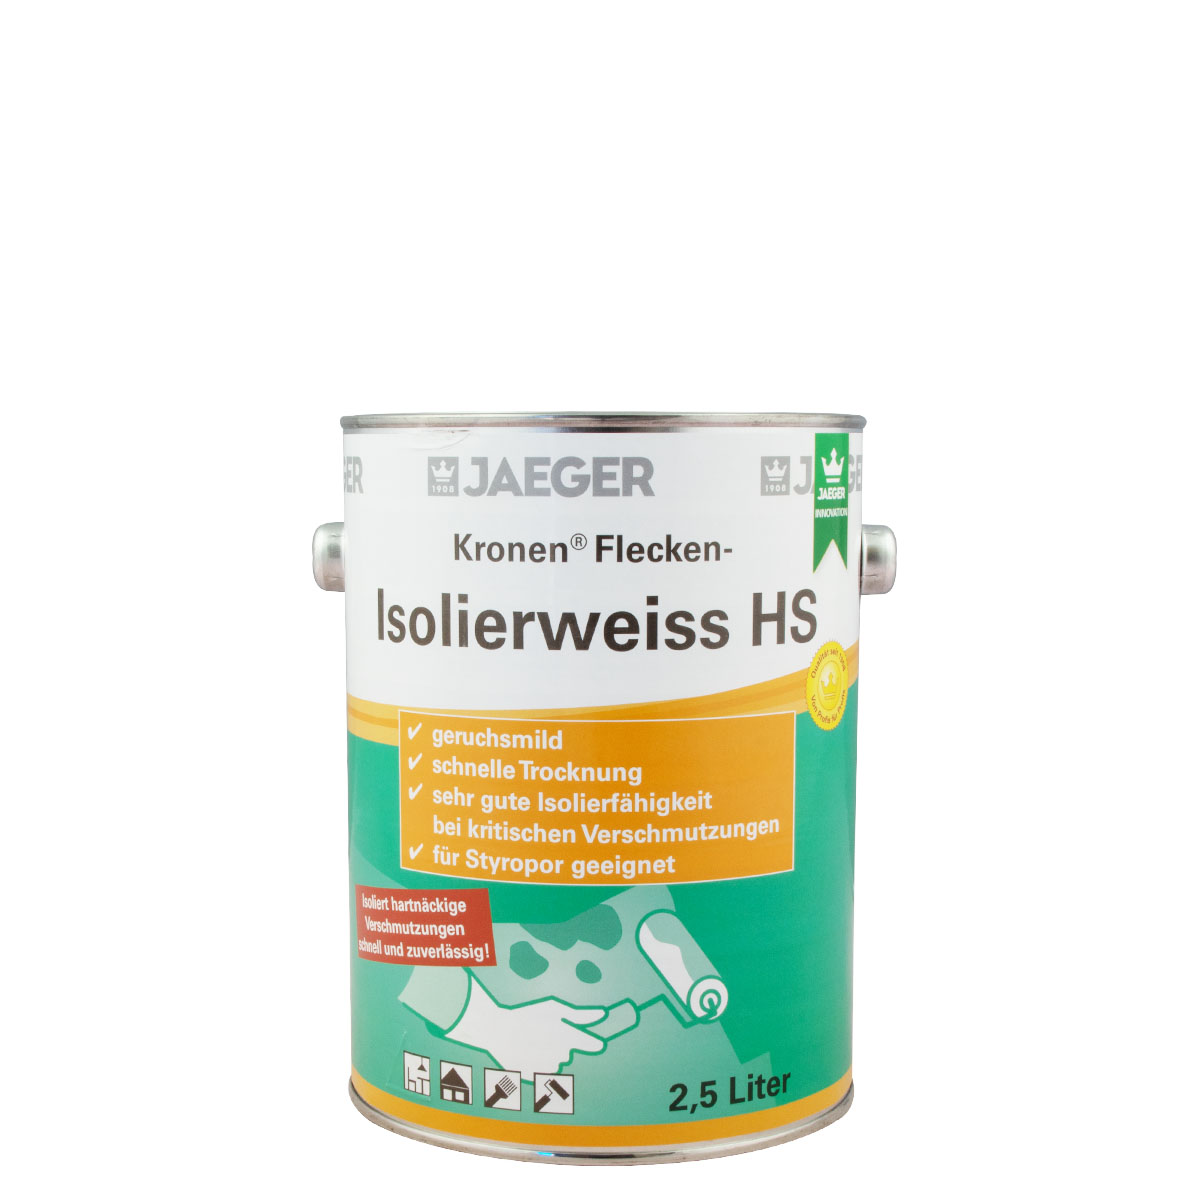 Jaeger Kronen Flecken-Isolierweiss HS123 2,5L